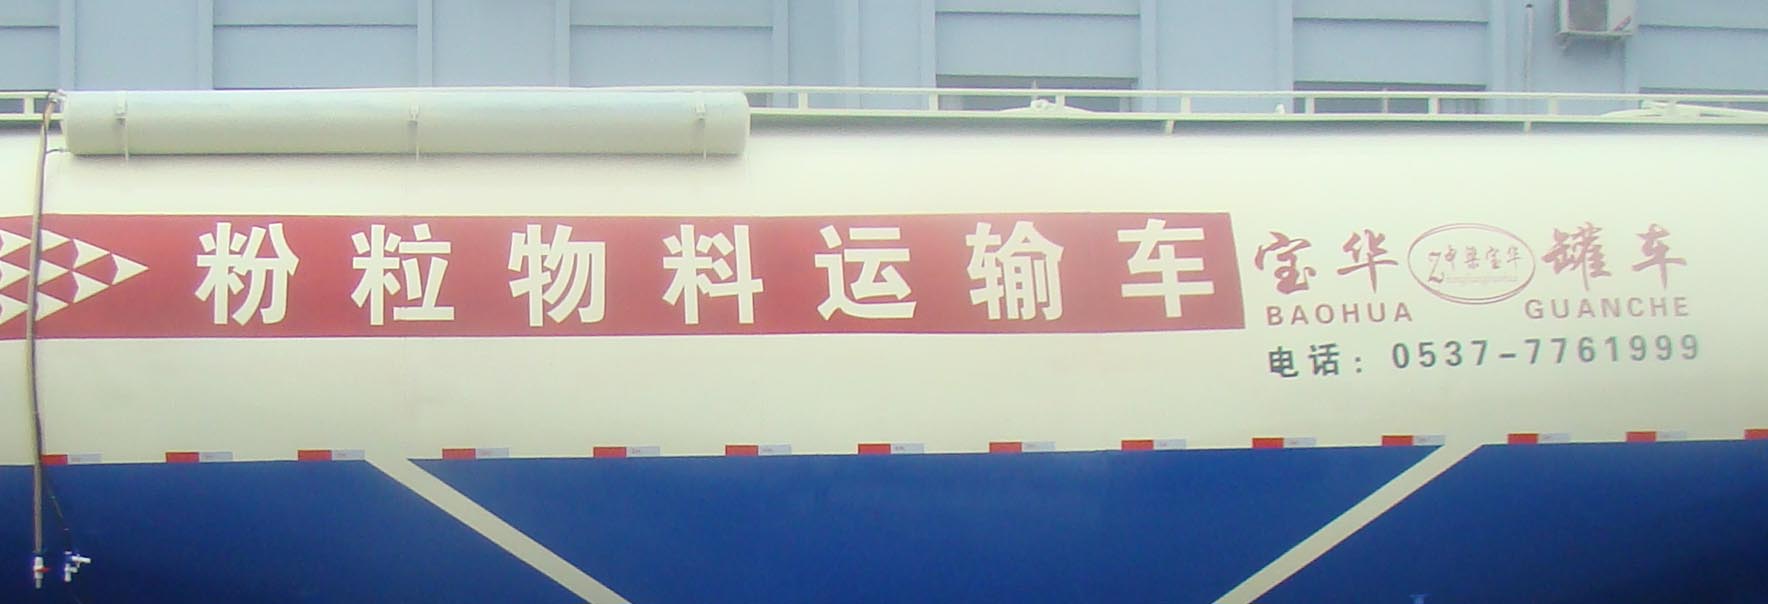 YDA9400GFL型中密度粉粒物料运输半挂车图片